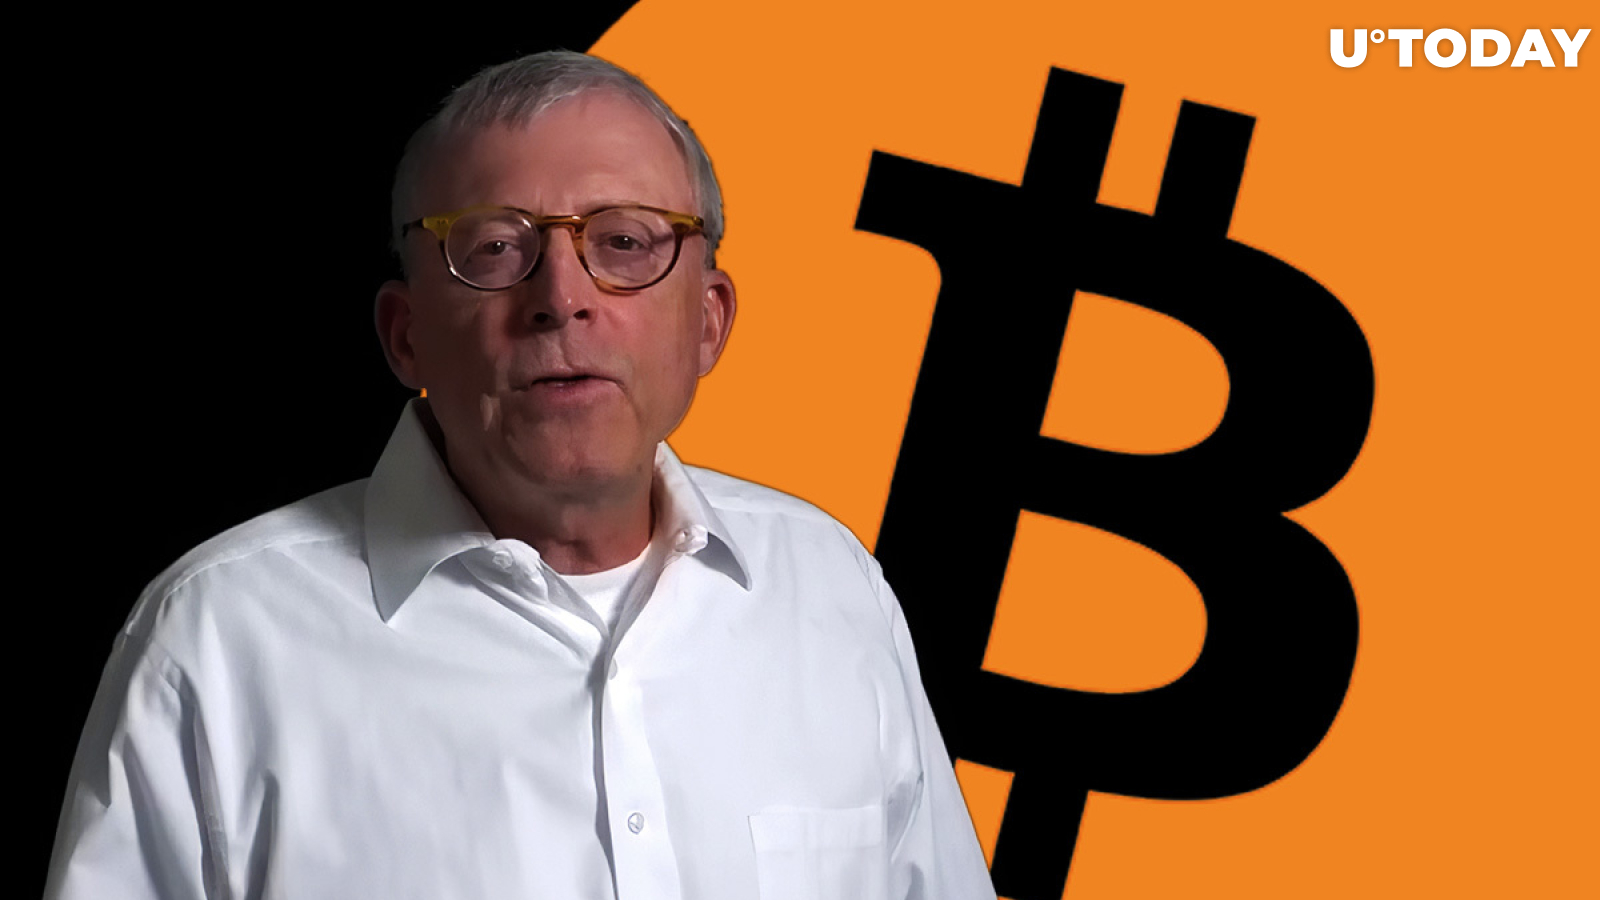 Does This Bullish Bitcoin (BTC) Narrative Make Sense? Peter Brandt Shares His Take